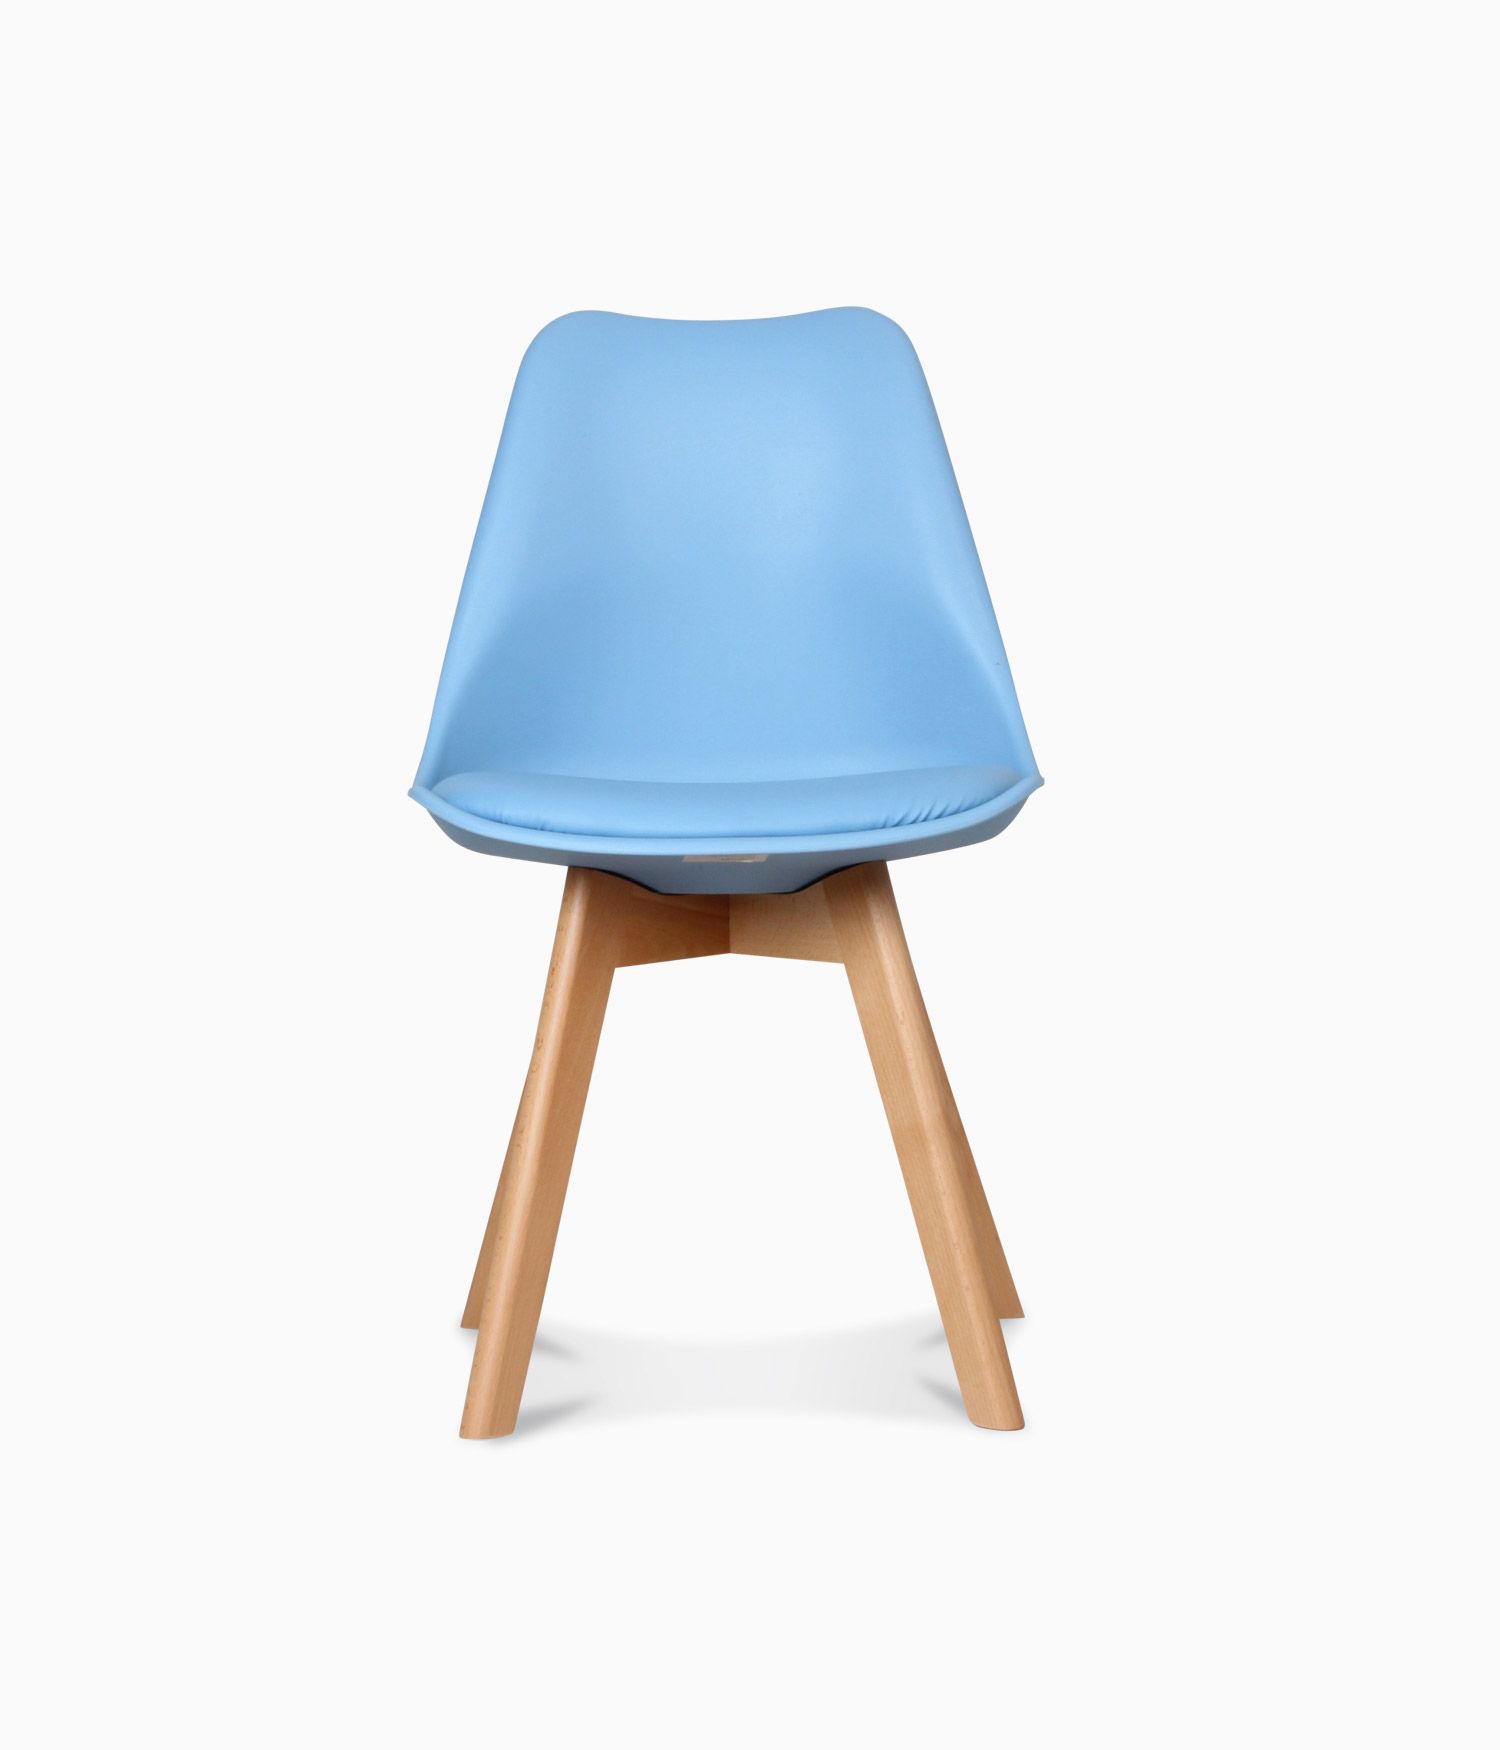 Chaise design scandinave - Bleu adriatic